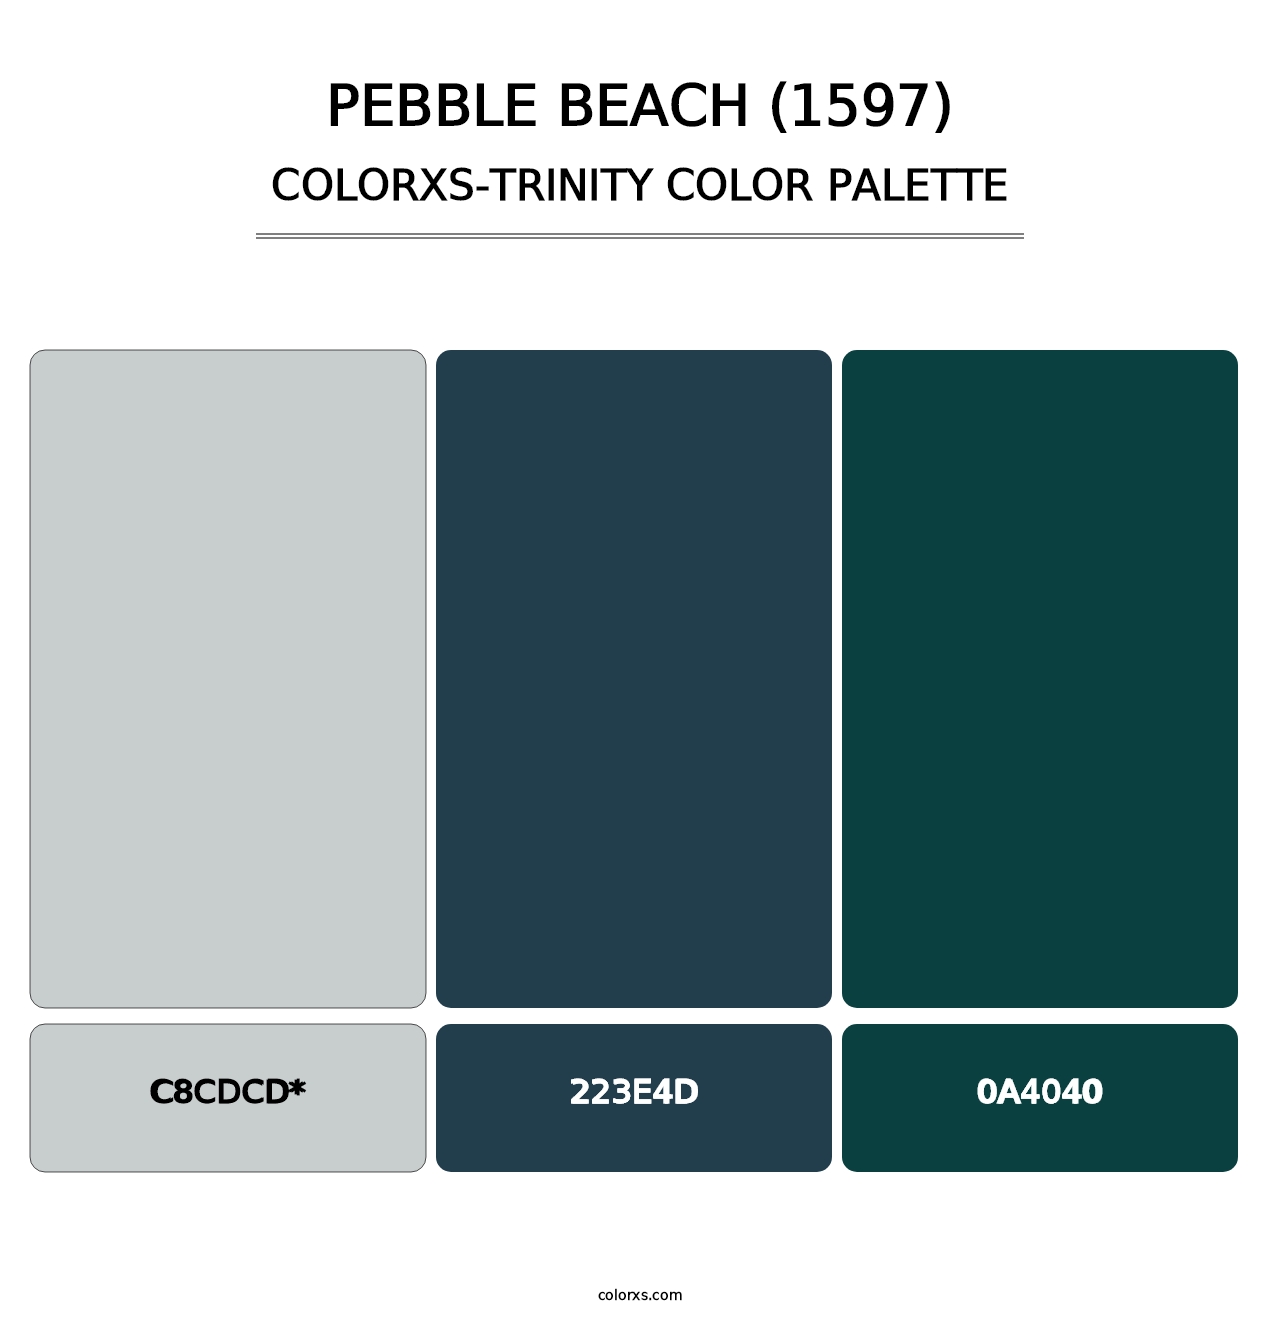 Pebble Beach (1597) - Colorxs Trinity Palette